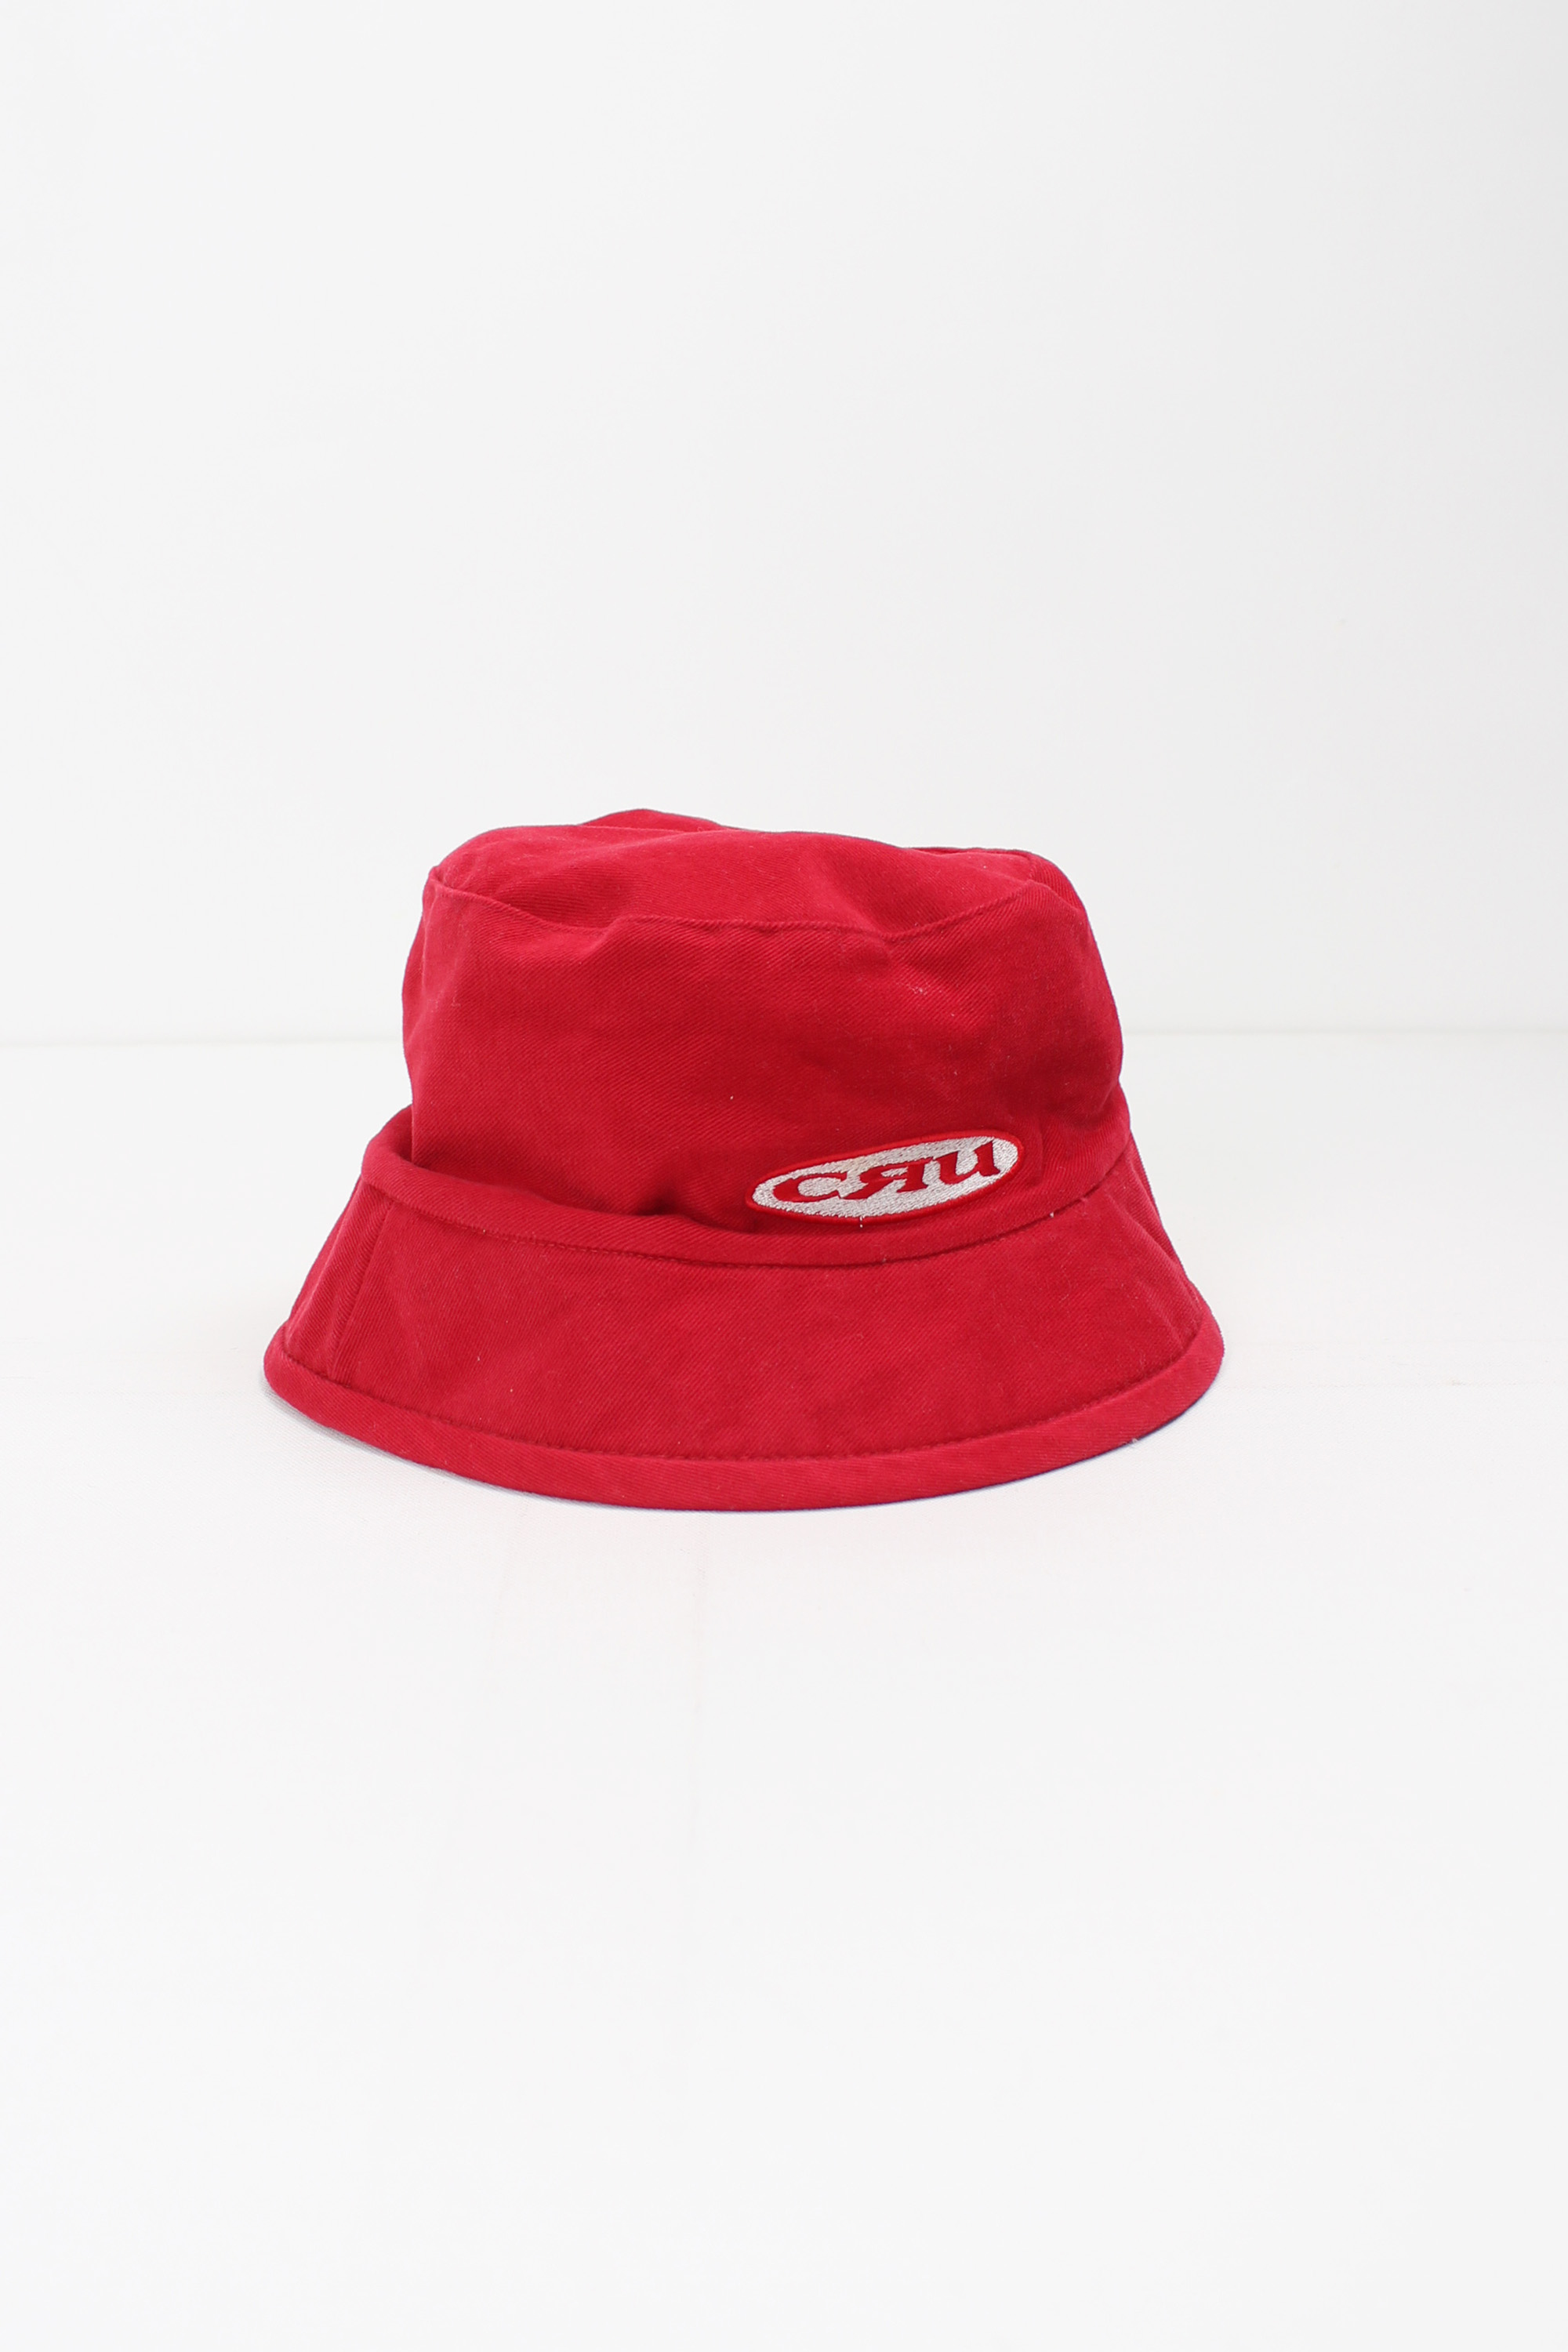 CRU bucket hat